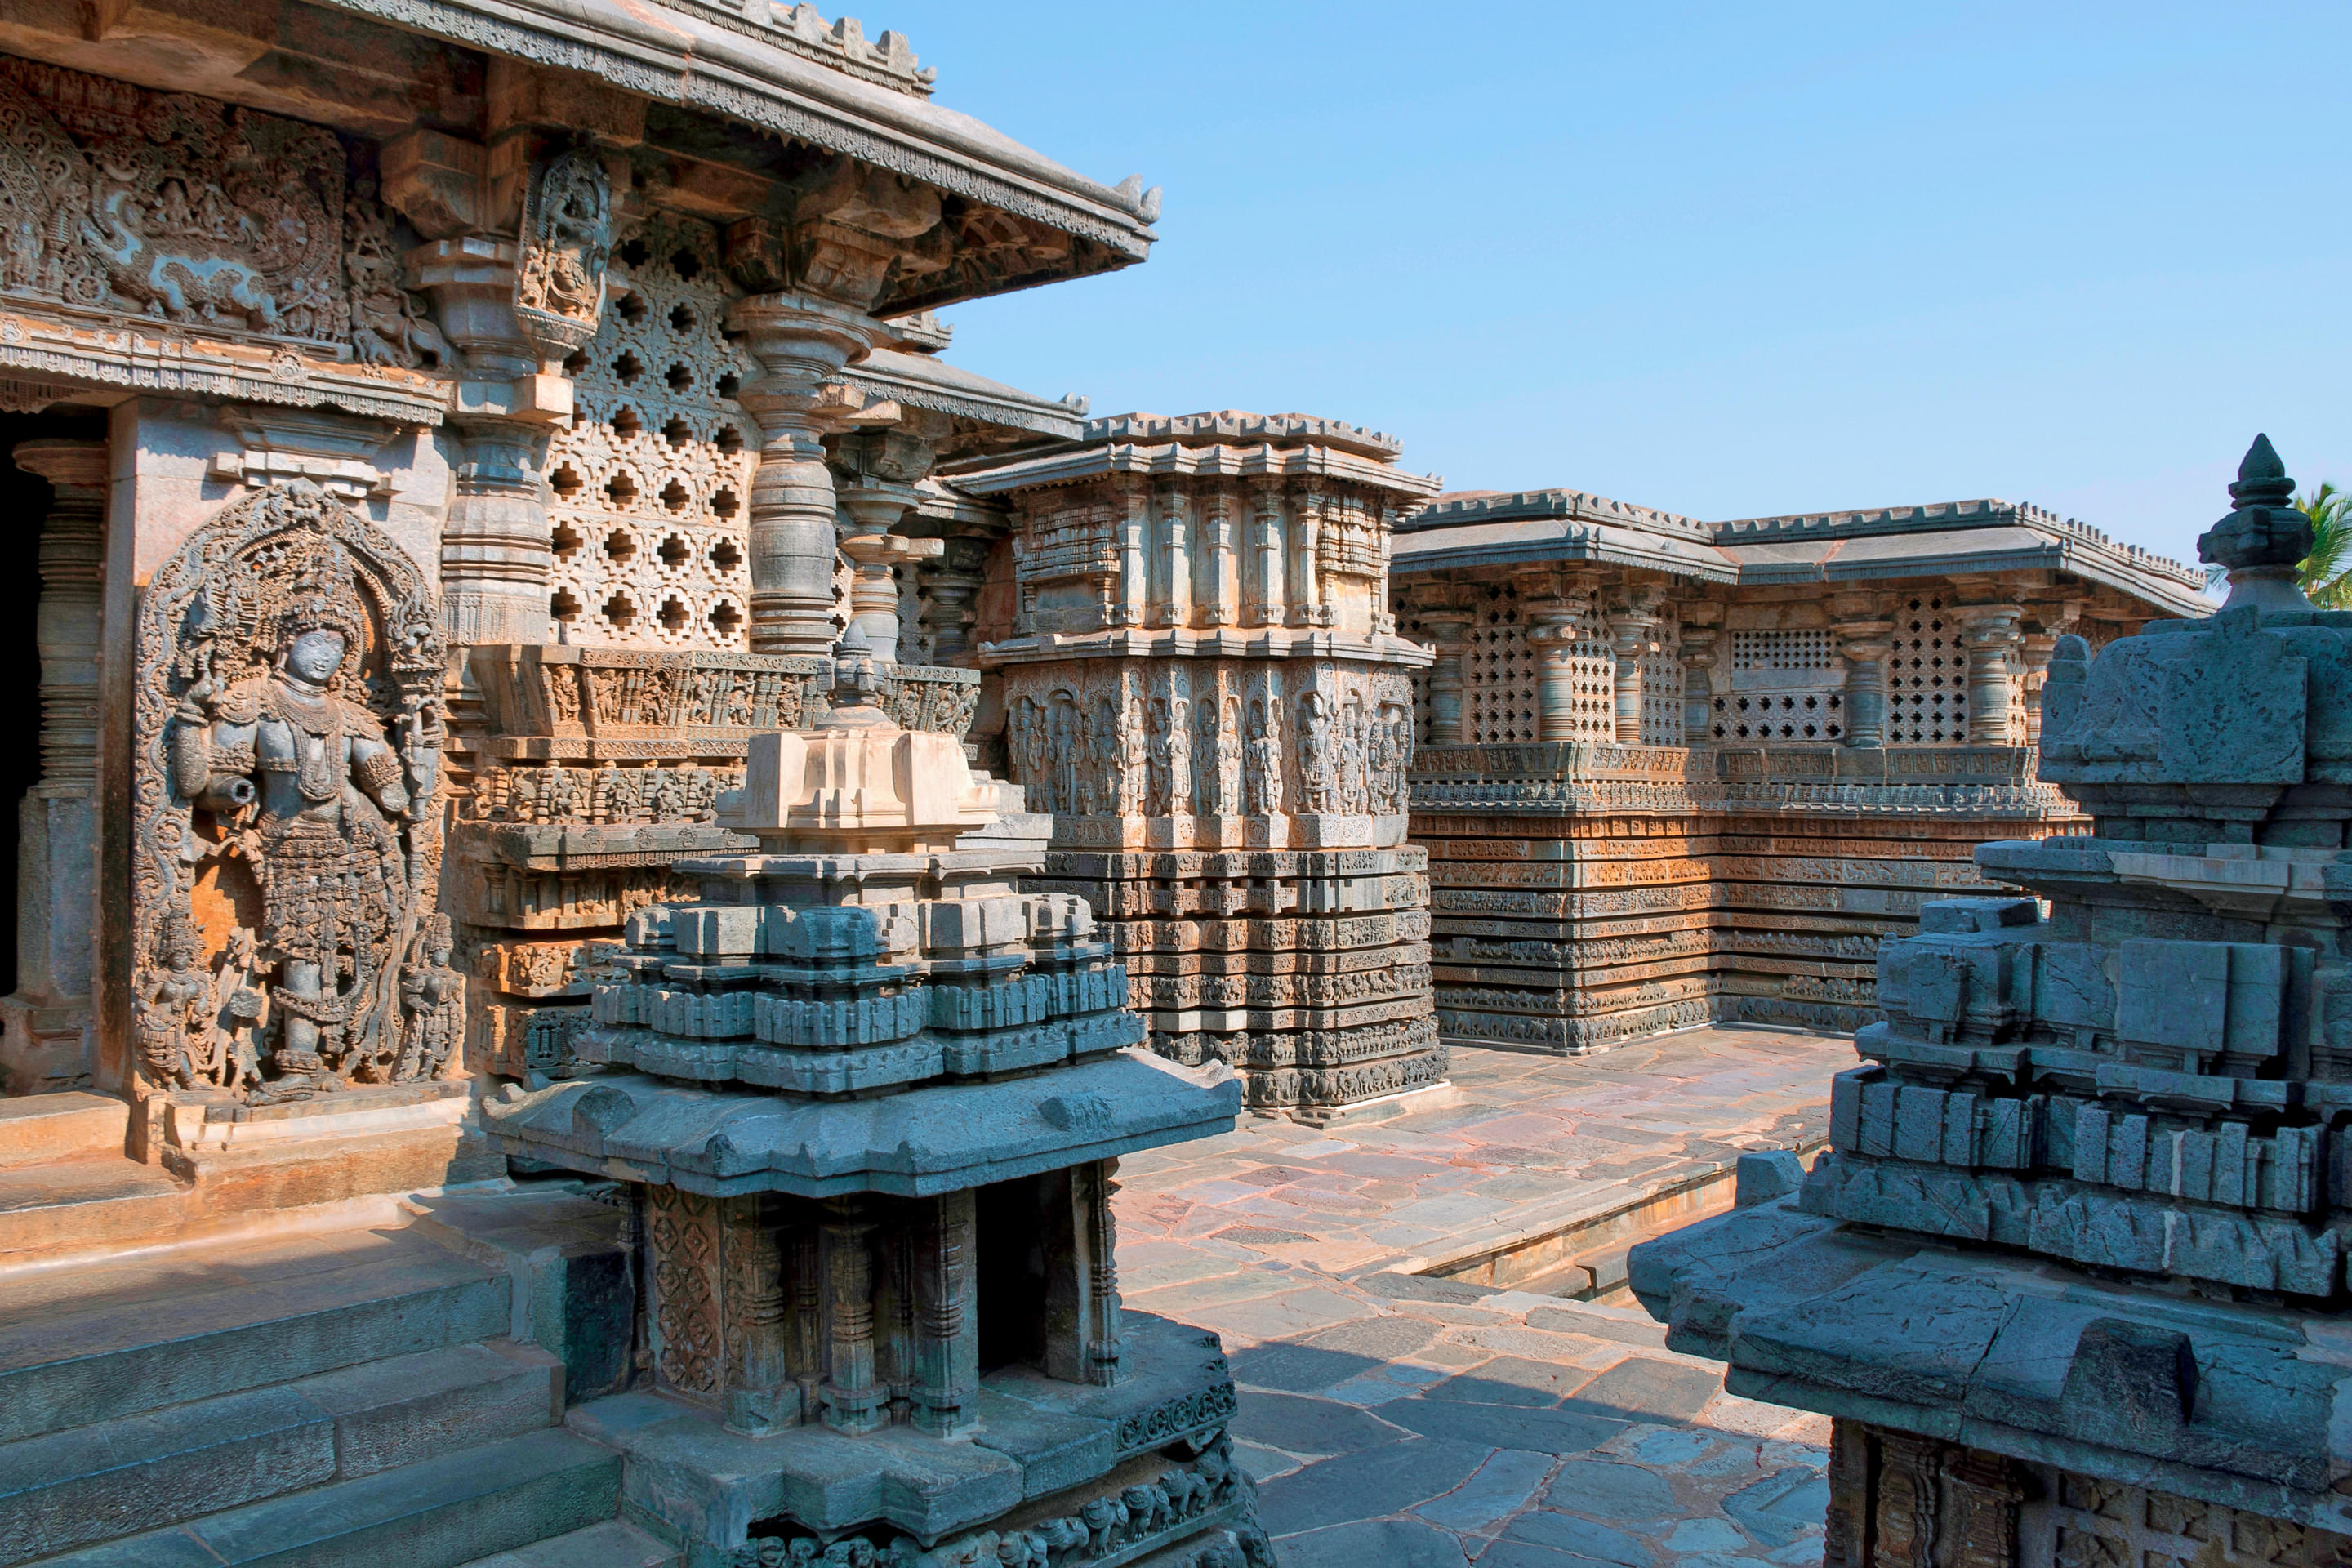 Shantaleswara Temple Overview